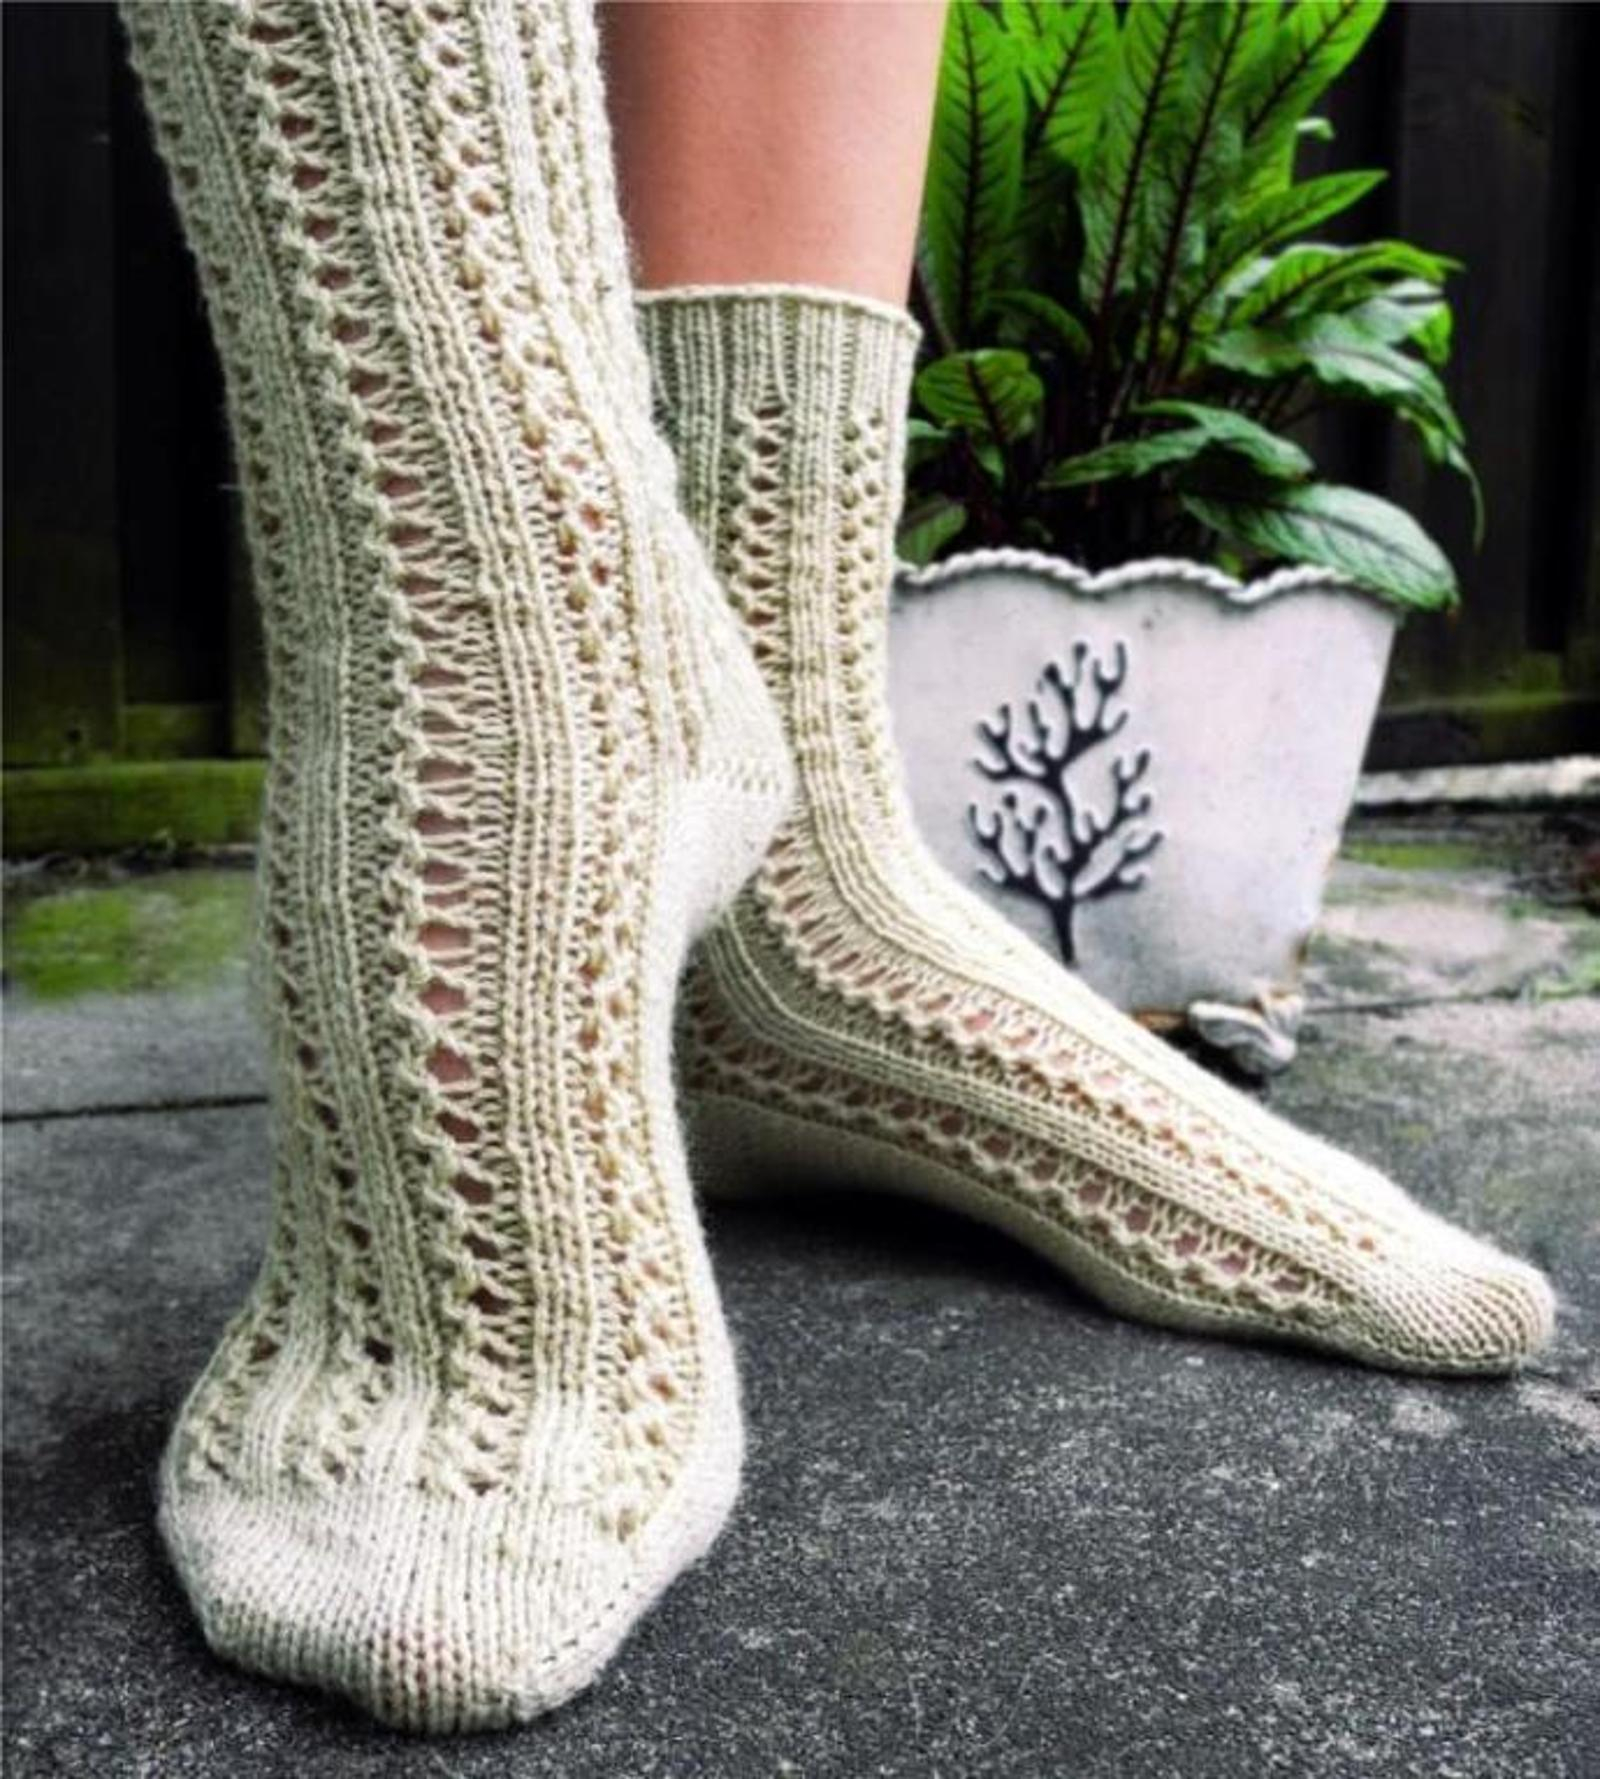 Toe Socks Knitting Pattern Short Row Heel Tutorial How To Knit A Short Row Heel For Toe Up Socks